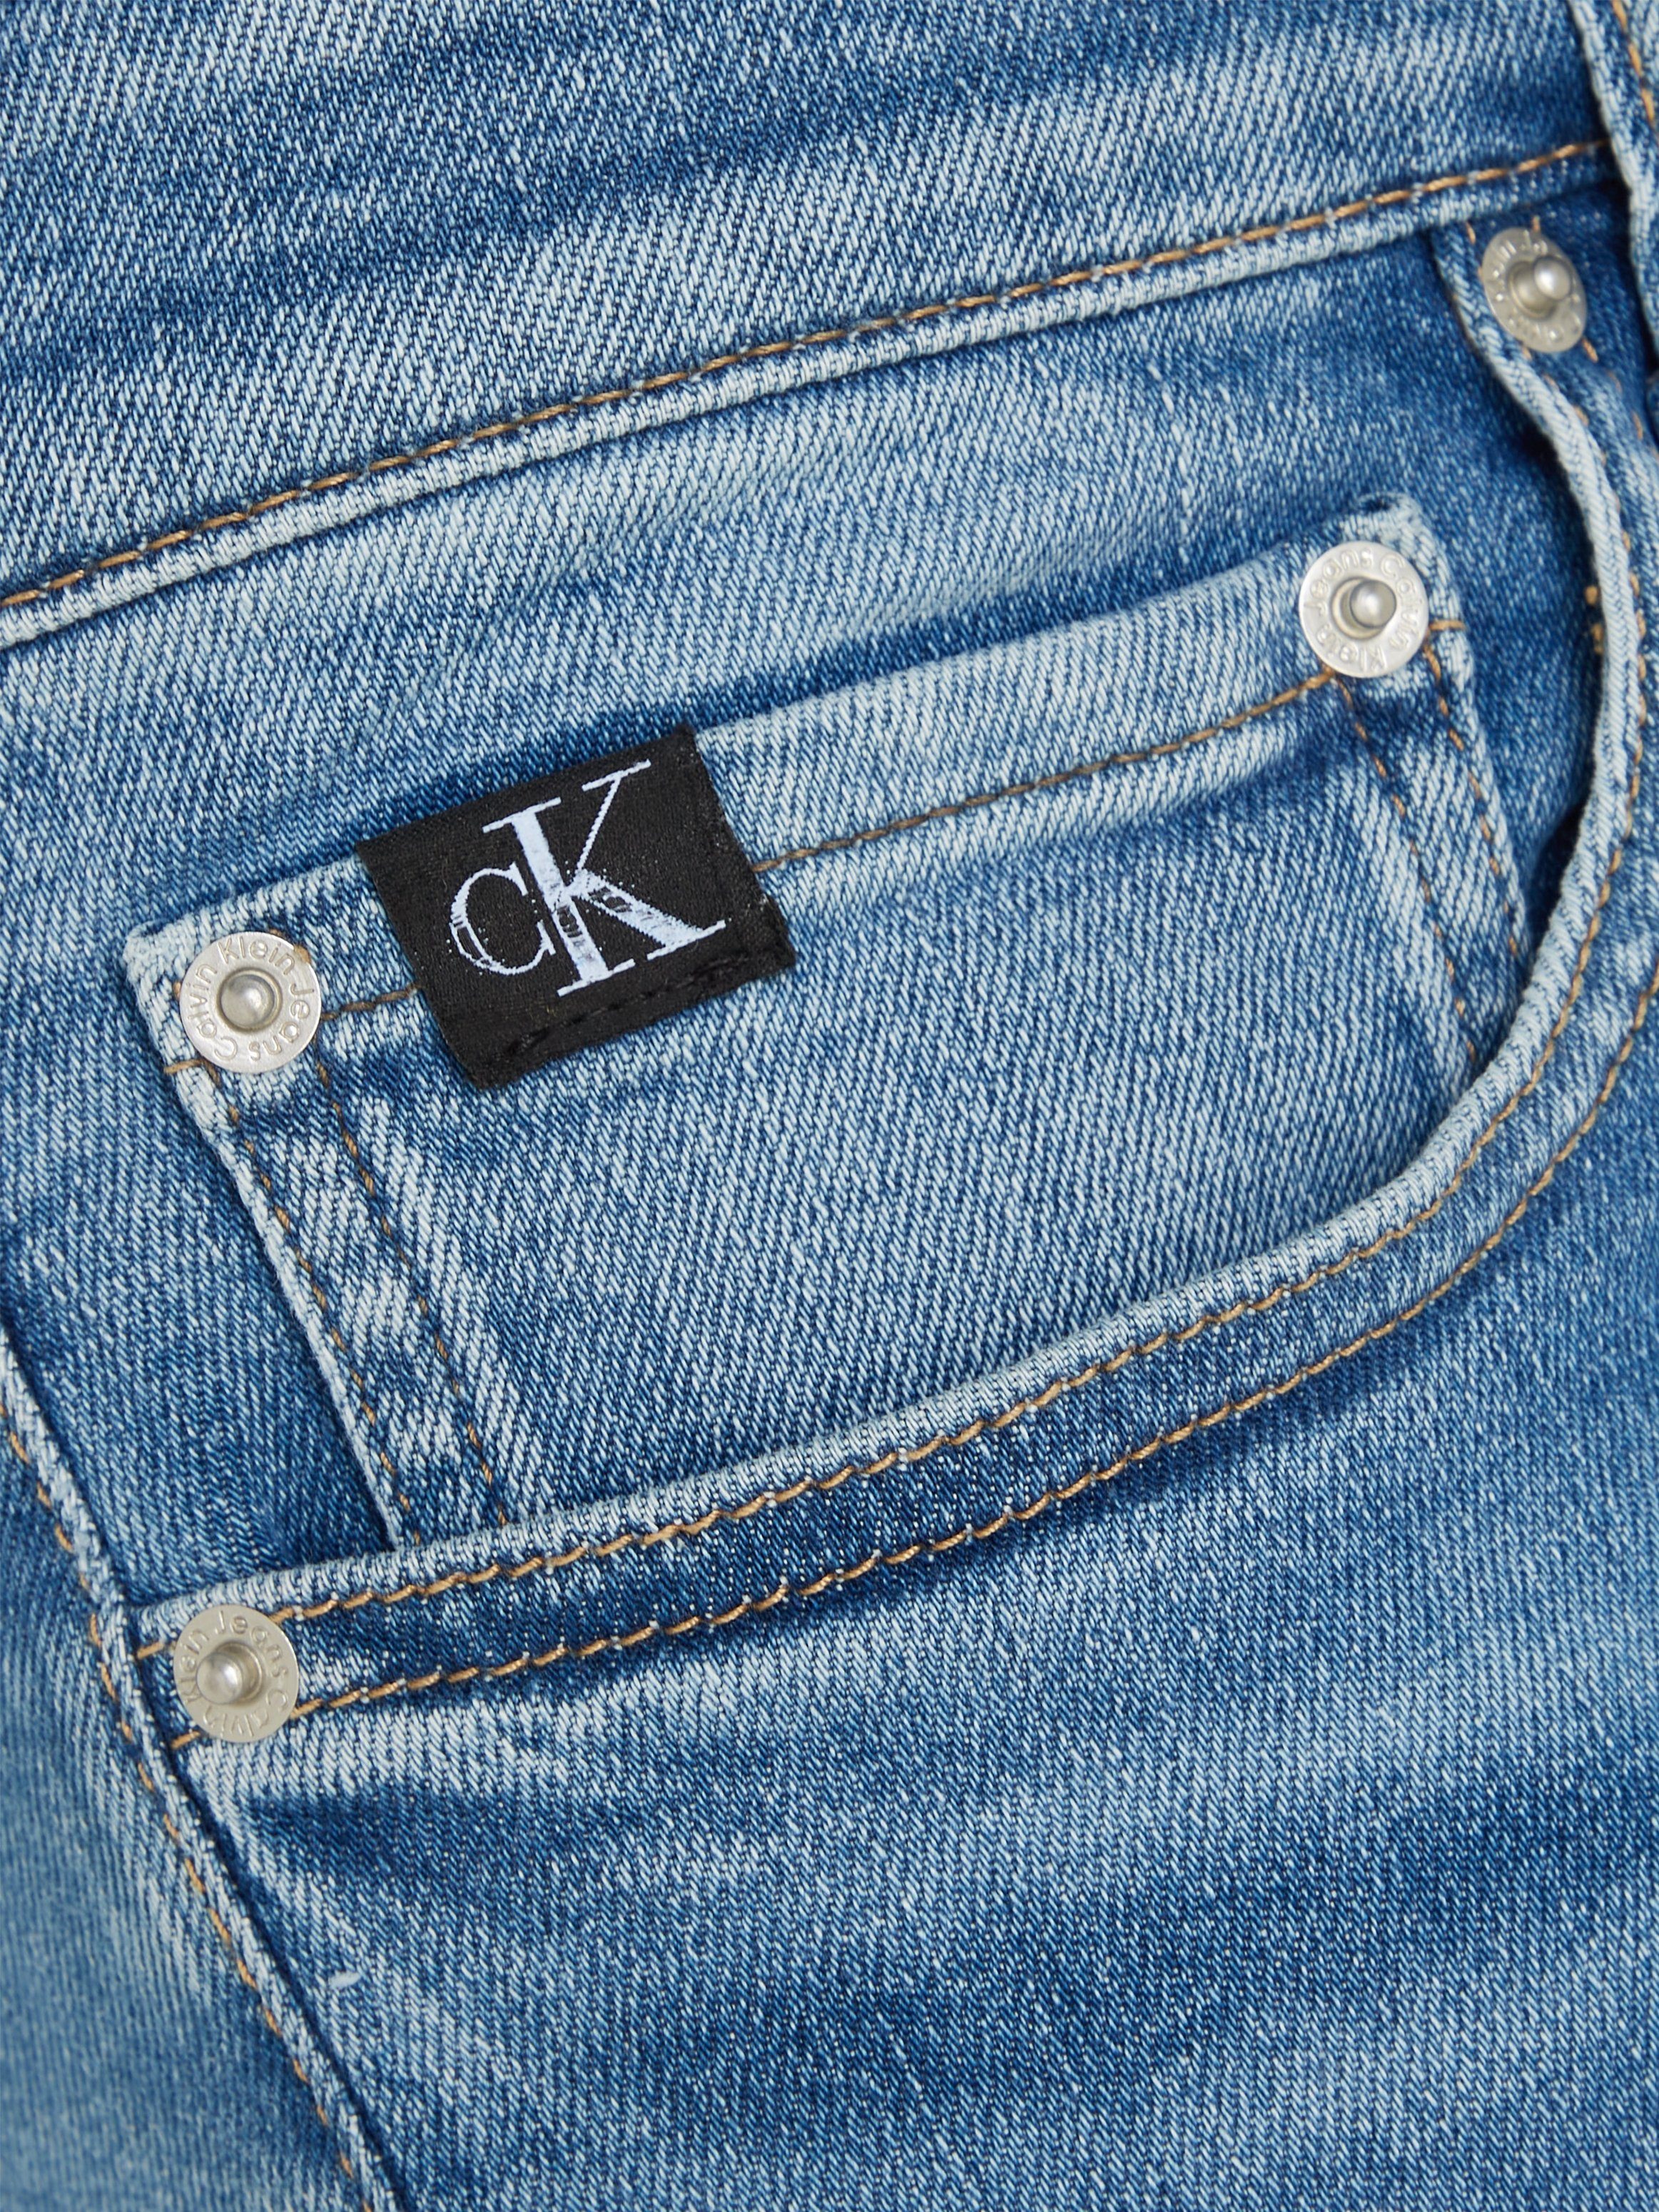 Calvin Klein JeansSLIM Slim-fit-Jeans blue_denim NOS Jeans